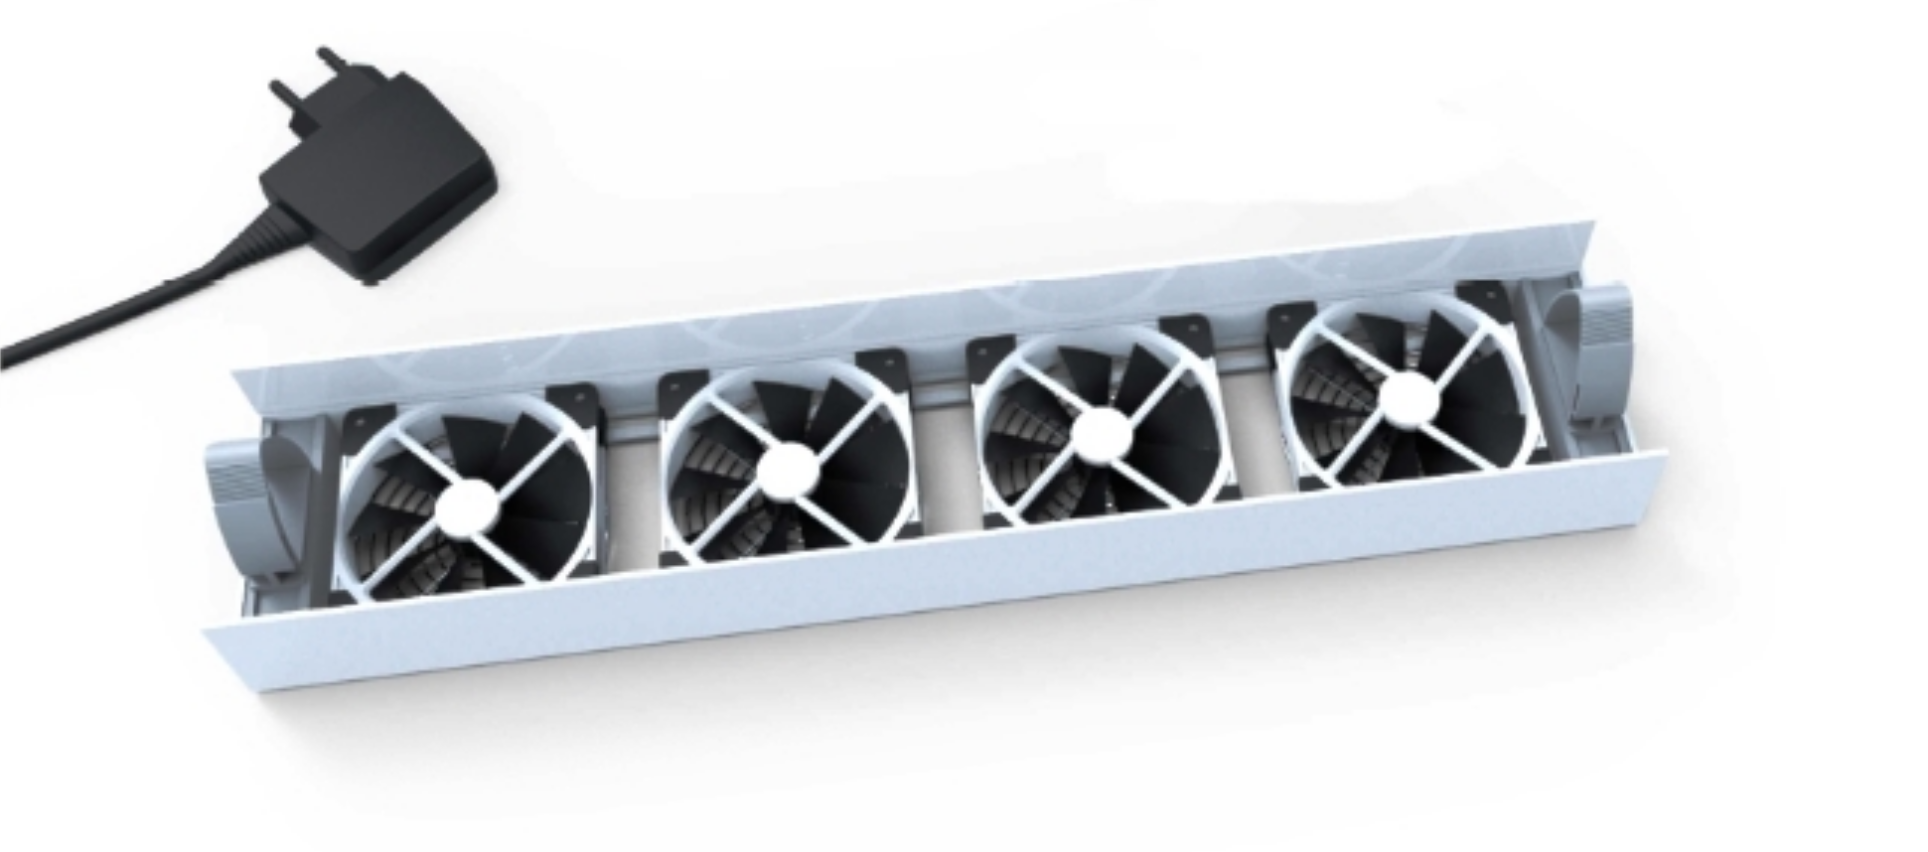 TURBOFANS - radiator performance multiplier device